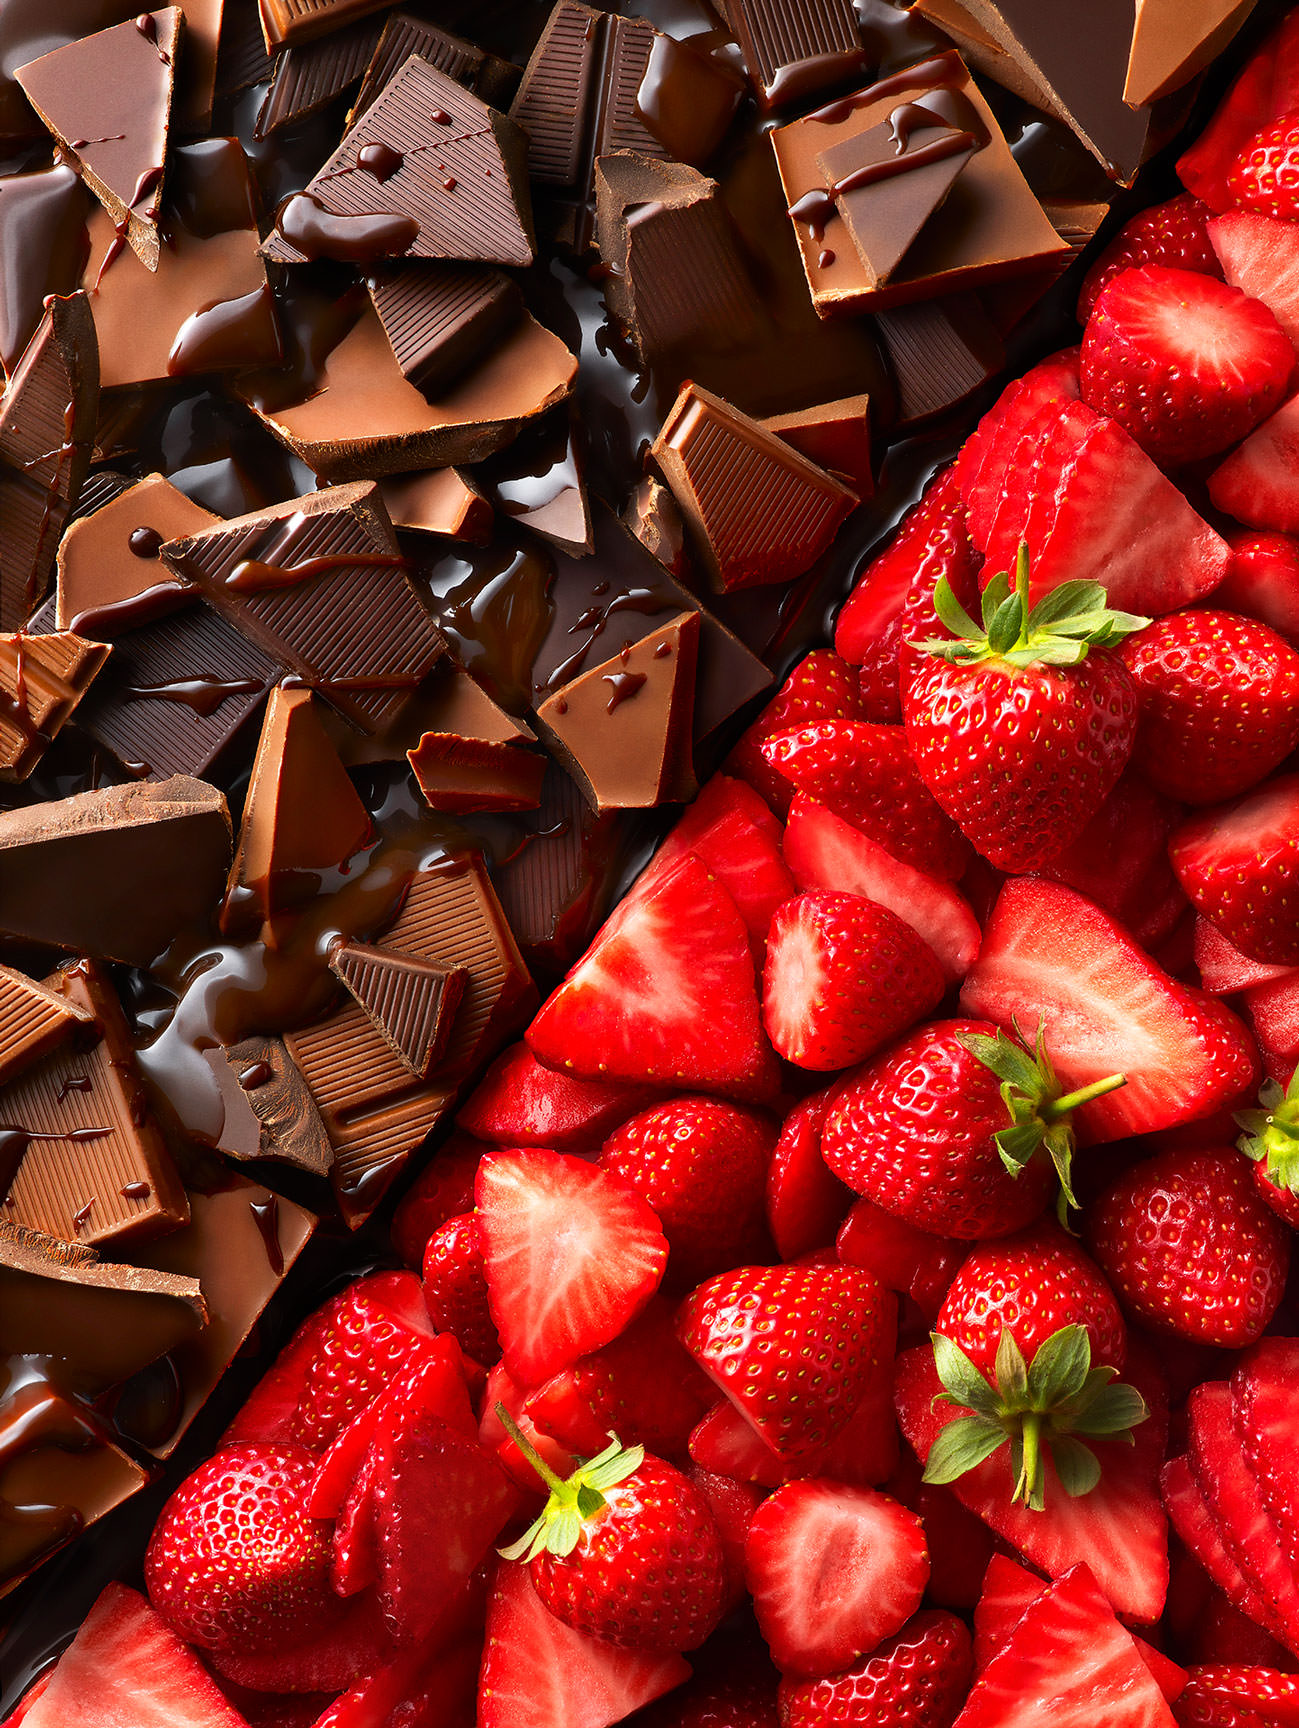 food pairings - strawberries and chocolate - London Food & Drinks Photographer